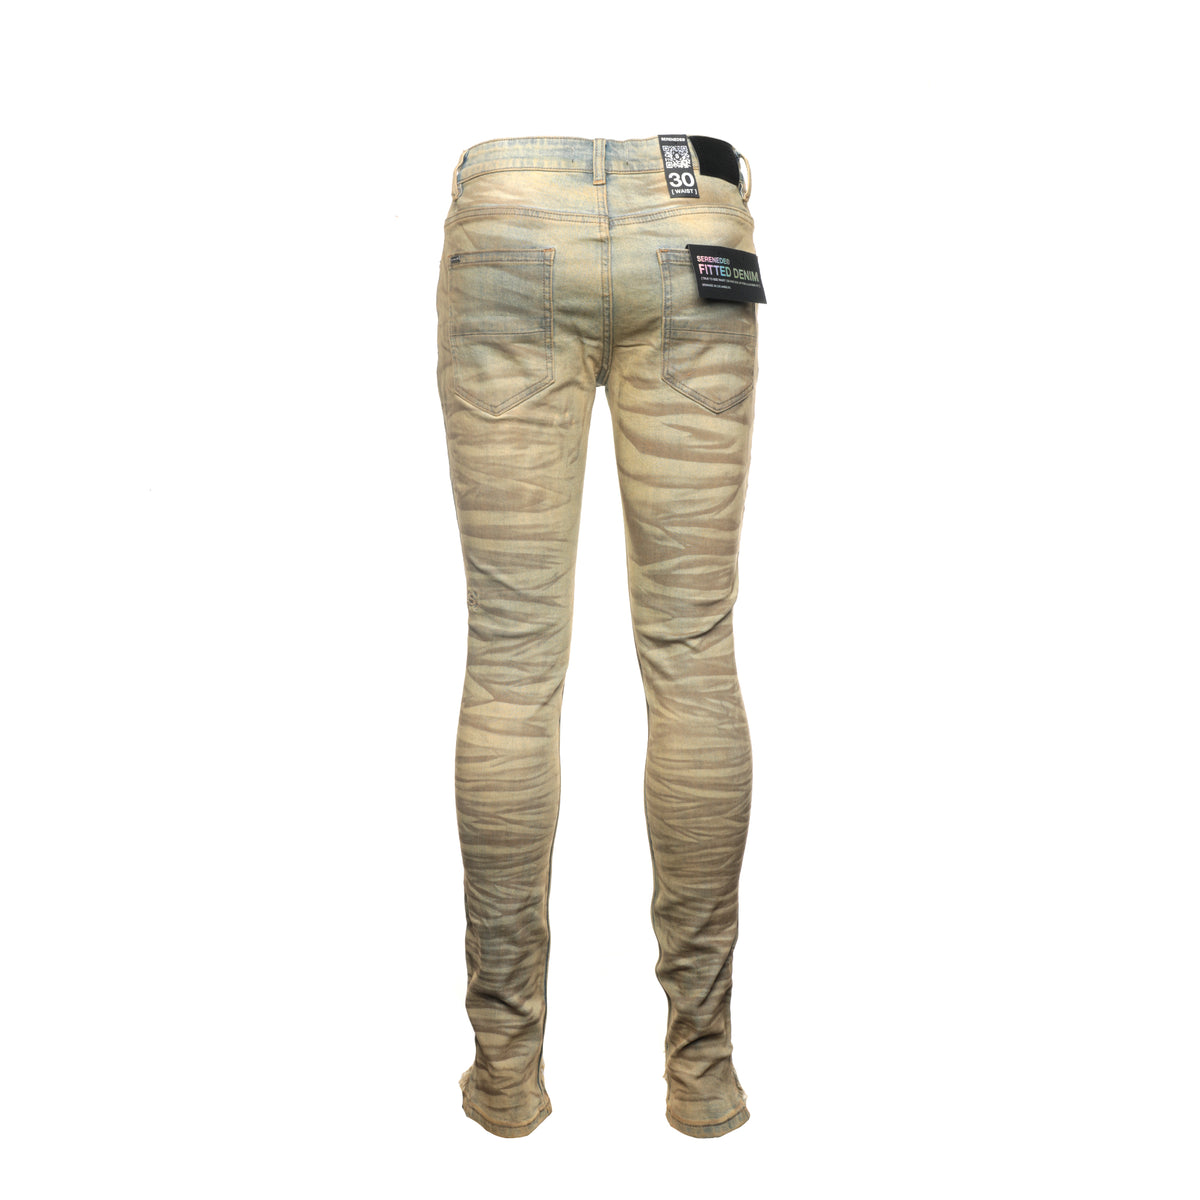 SERENEDE "Sand" Men's Skinny Jeans - SIZE Boutique